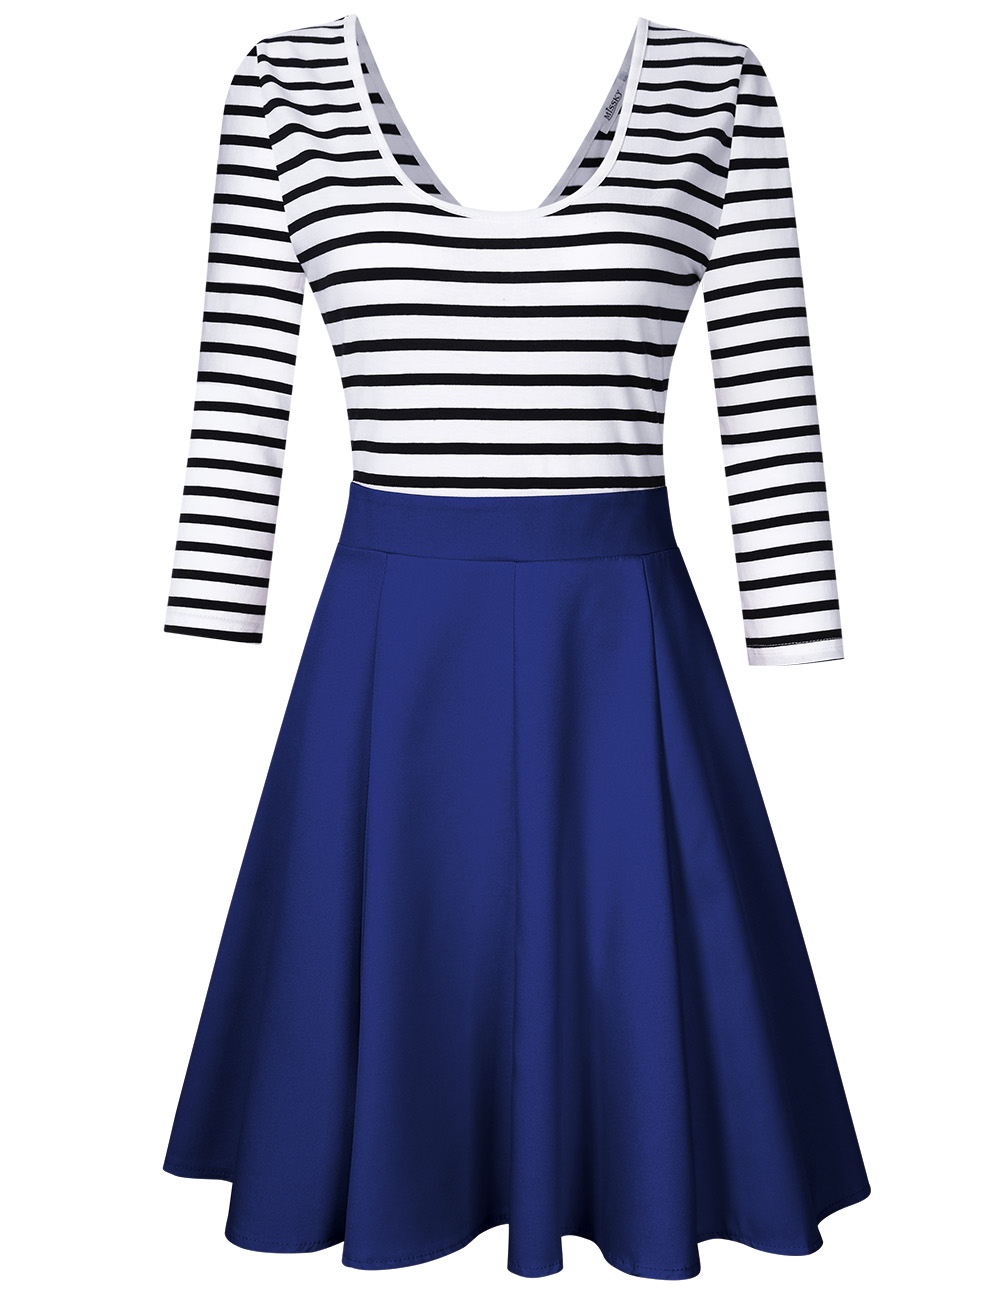 [US Direct] MISSKY Women's 3/4 Sleeve Slim Fit Black White Stripe Casual Cocktail Cute Mini Swing Dress Deep blue_L